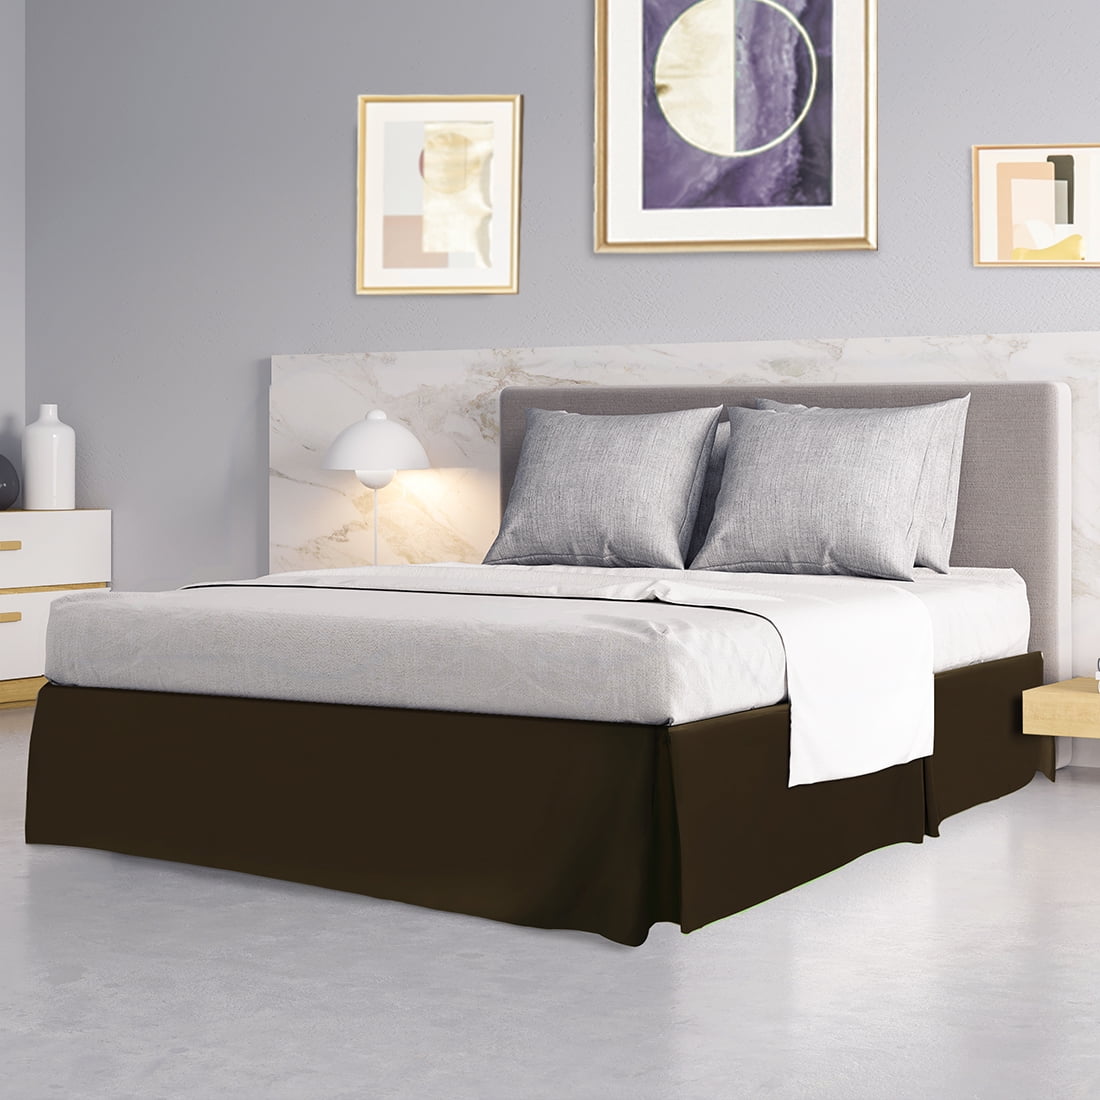 Dust Ruffle Bed Skirt Premium Luxury Brushed  Bedding Pleated Skirt Hotel Home 